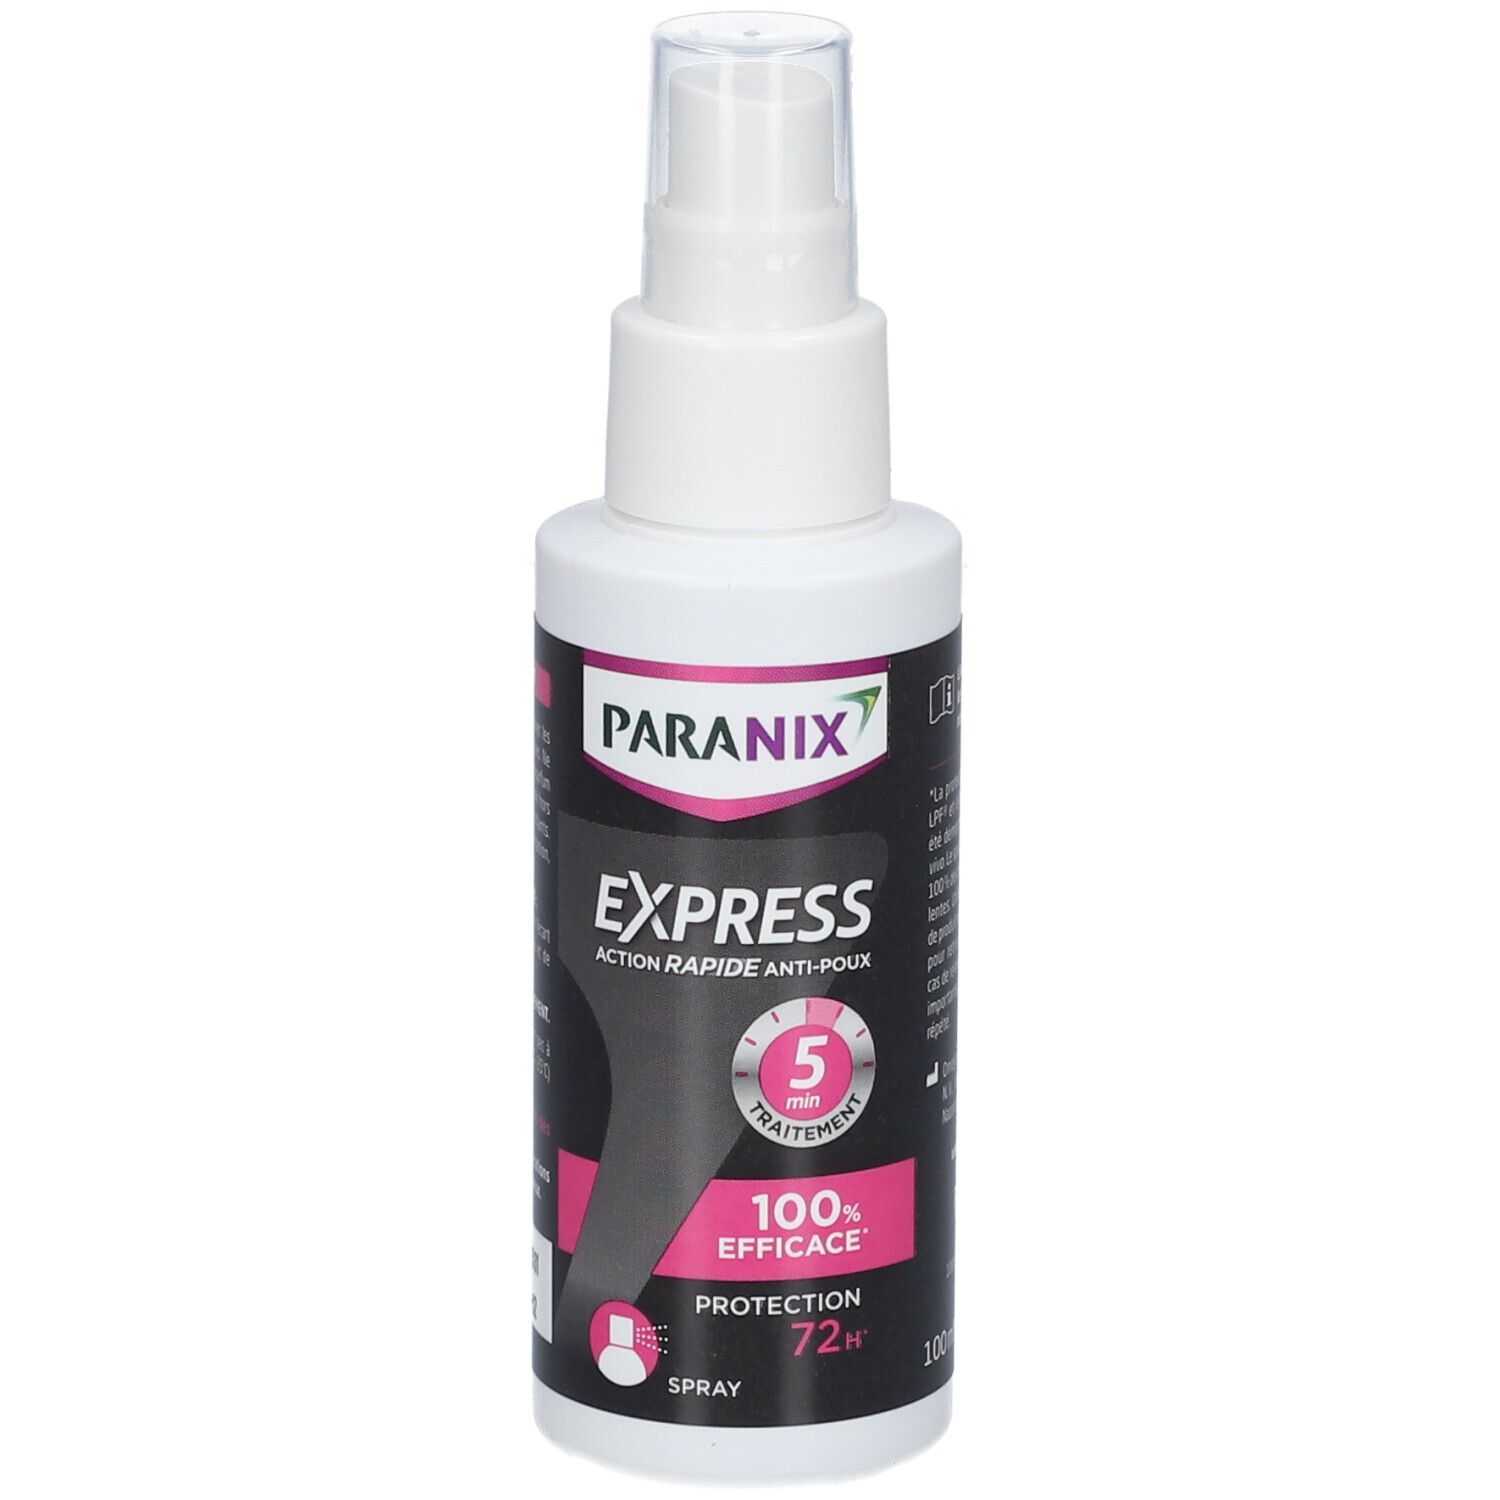 Paranix Express action rapide anti-poux Spray